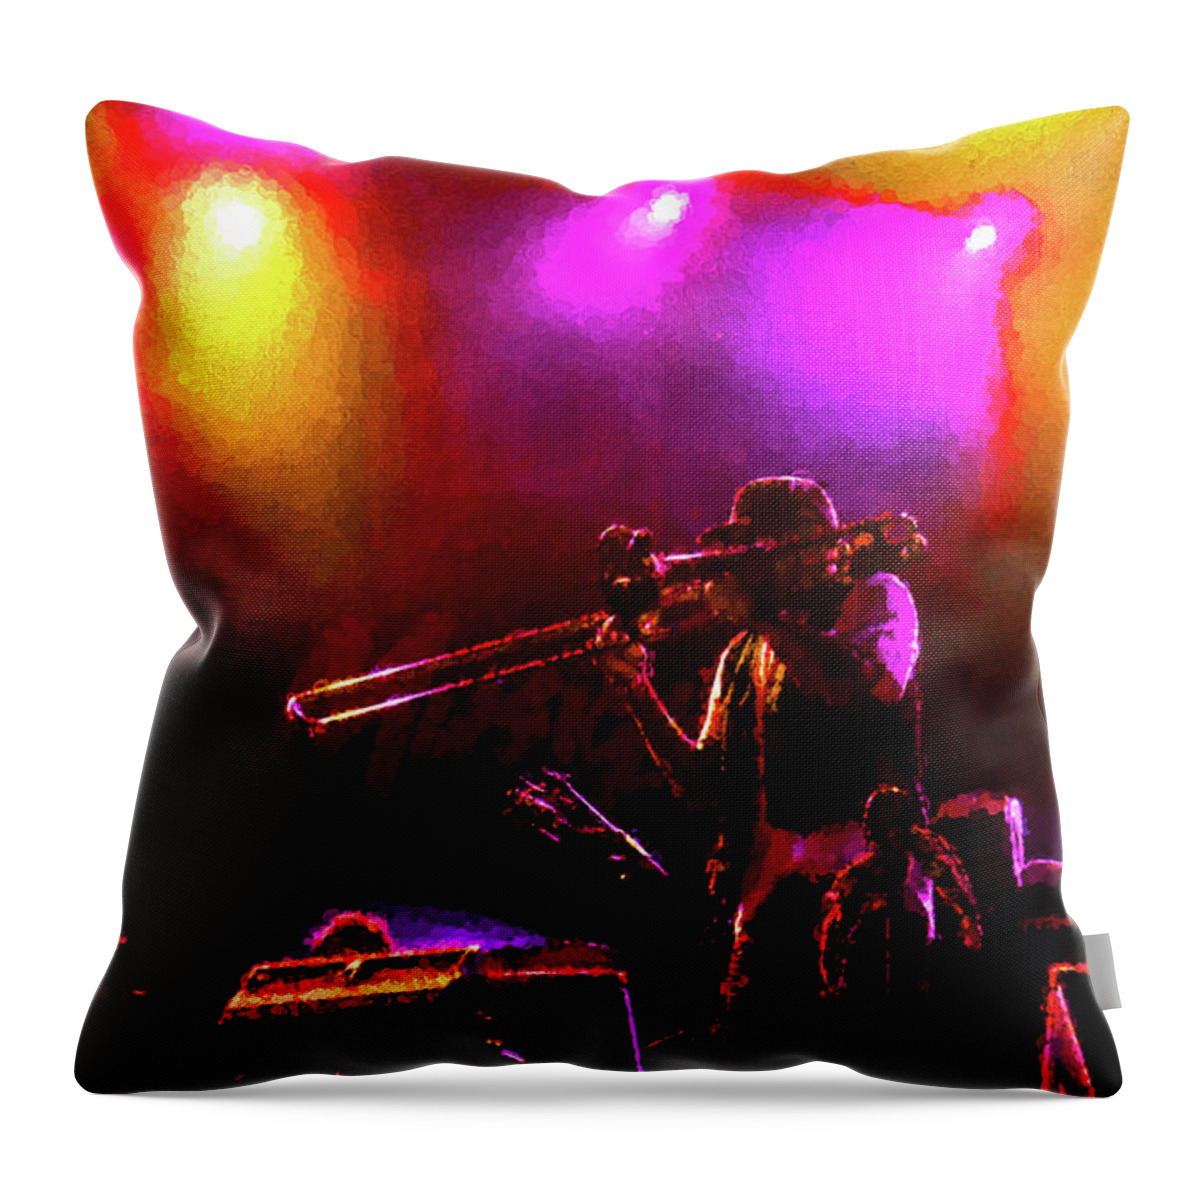 Jazz Throw Pillow featuring the digital art Jazz Trio - a Jam Session in Purple and Yellow by Georgia Mizuleva